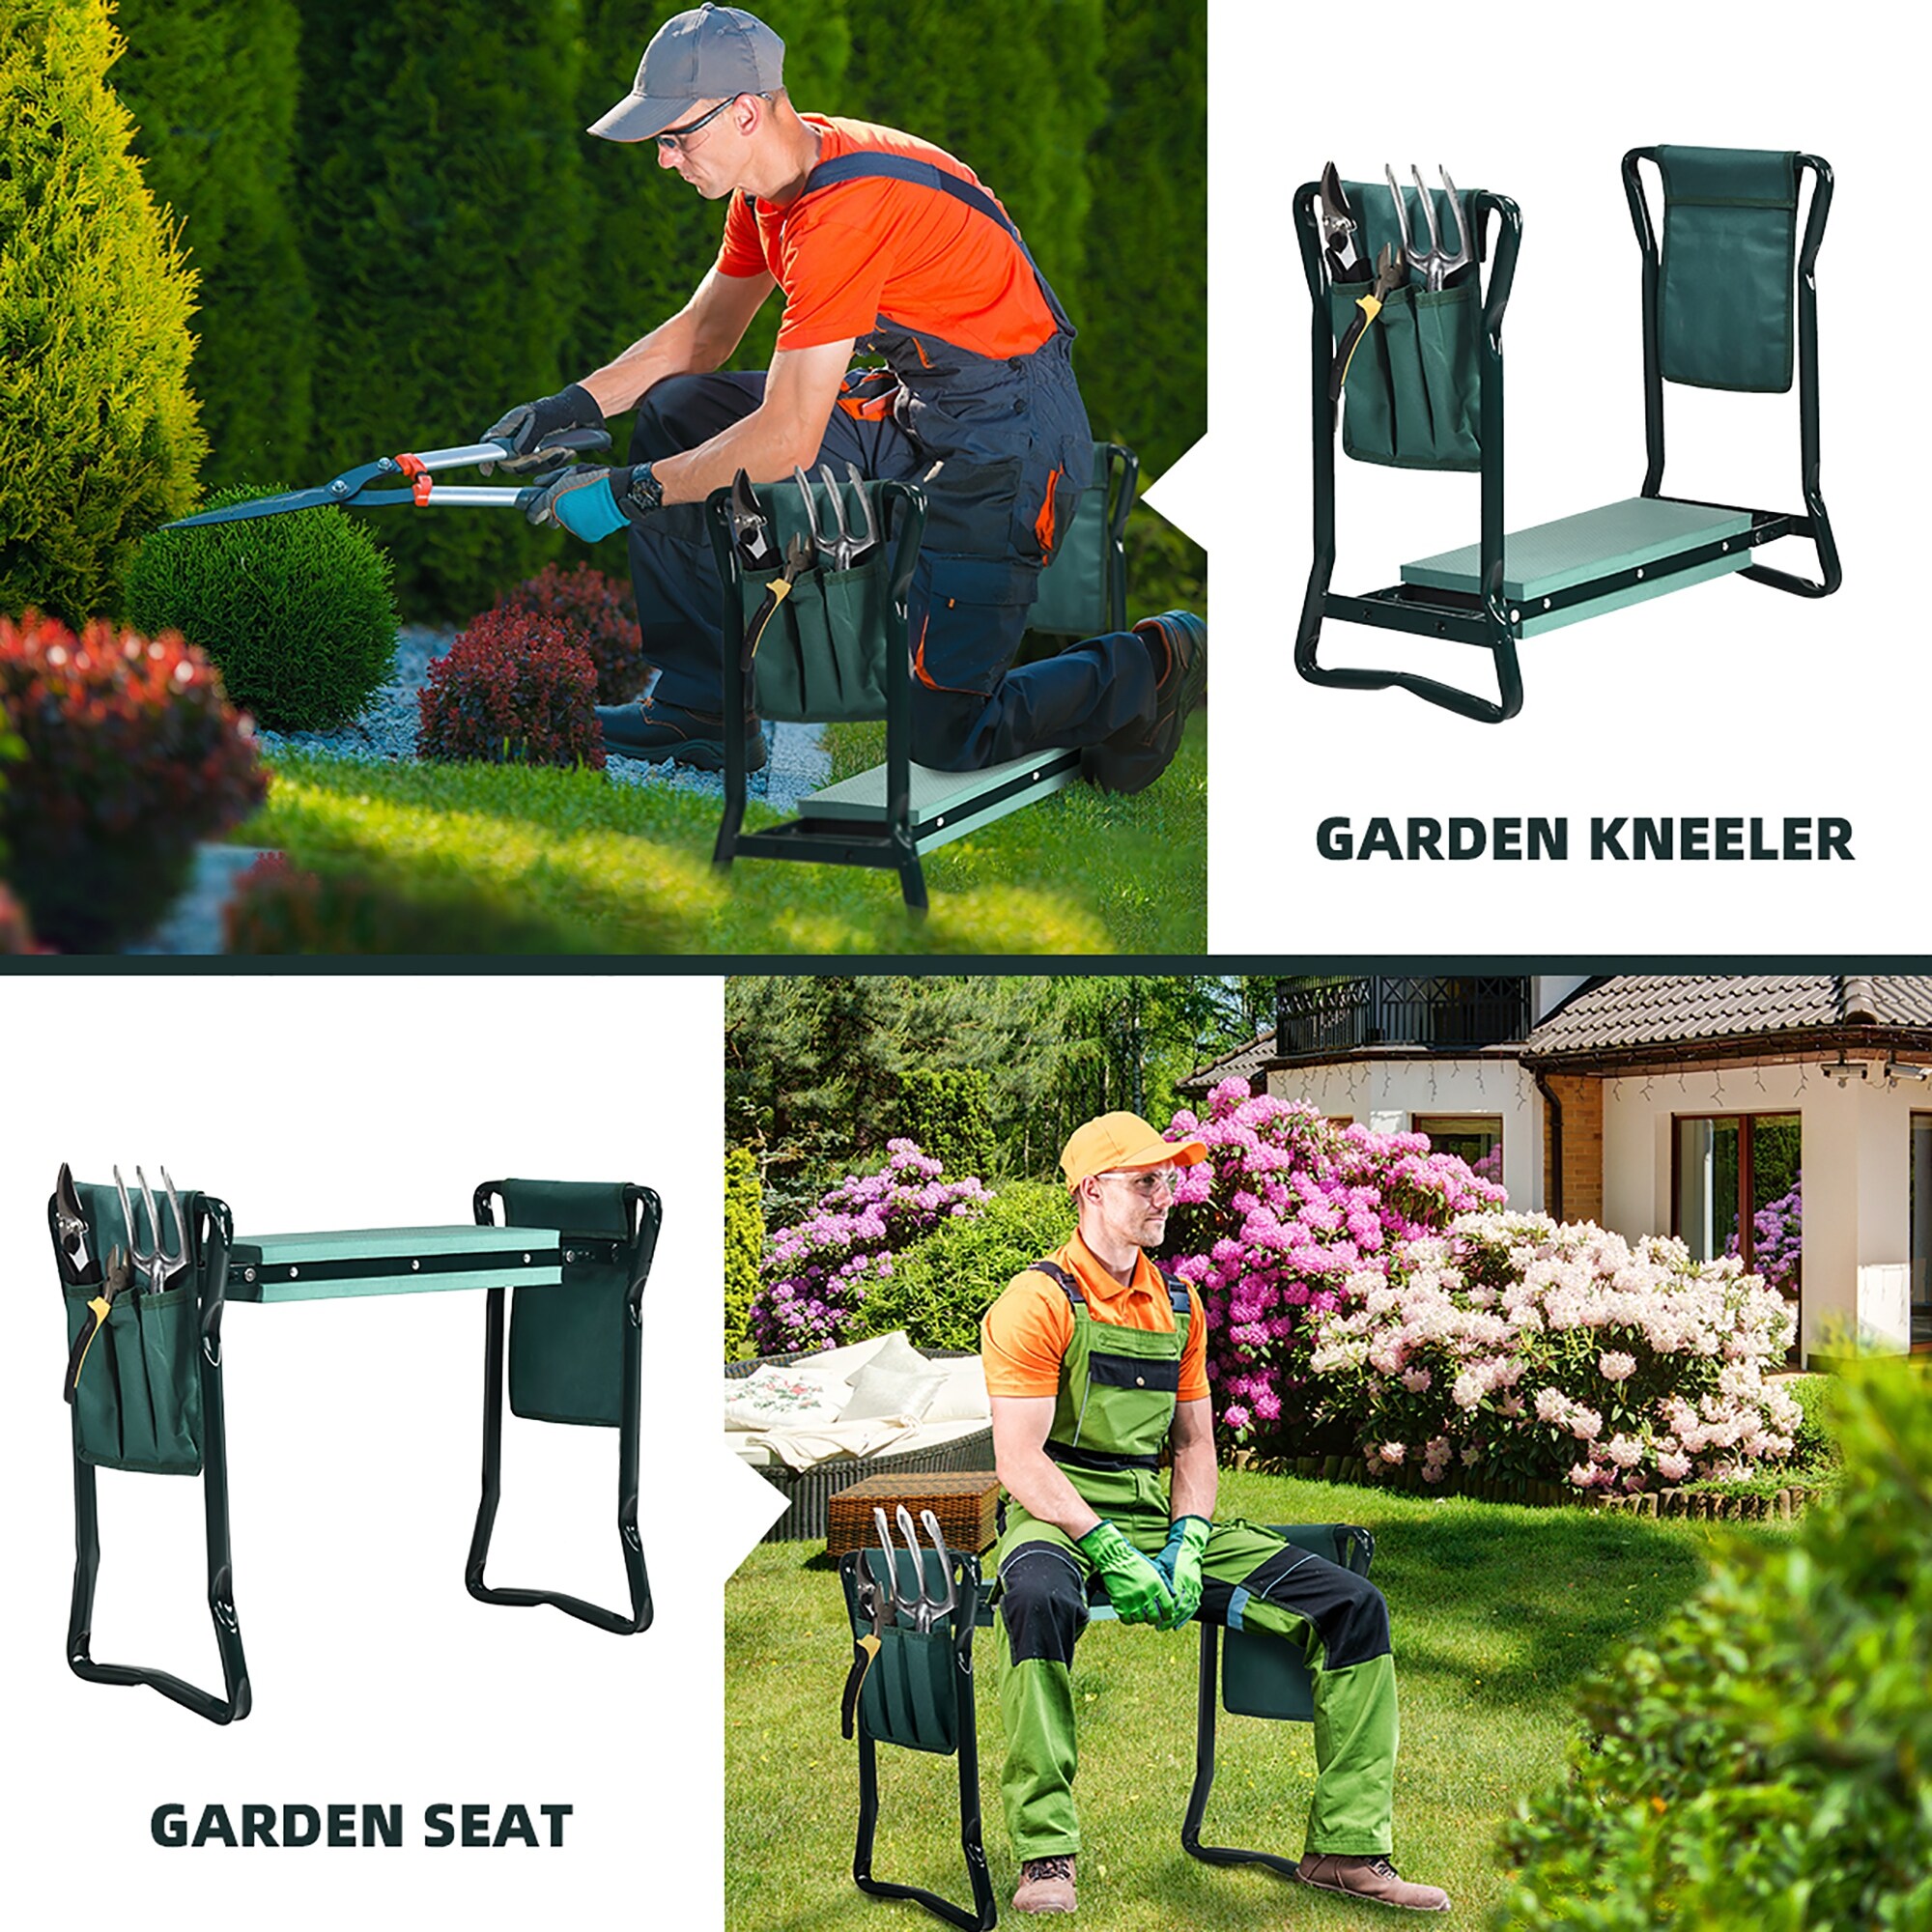 Foldable Garden Kneeler Bench Portable Garden Stool with Tools Pouch